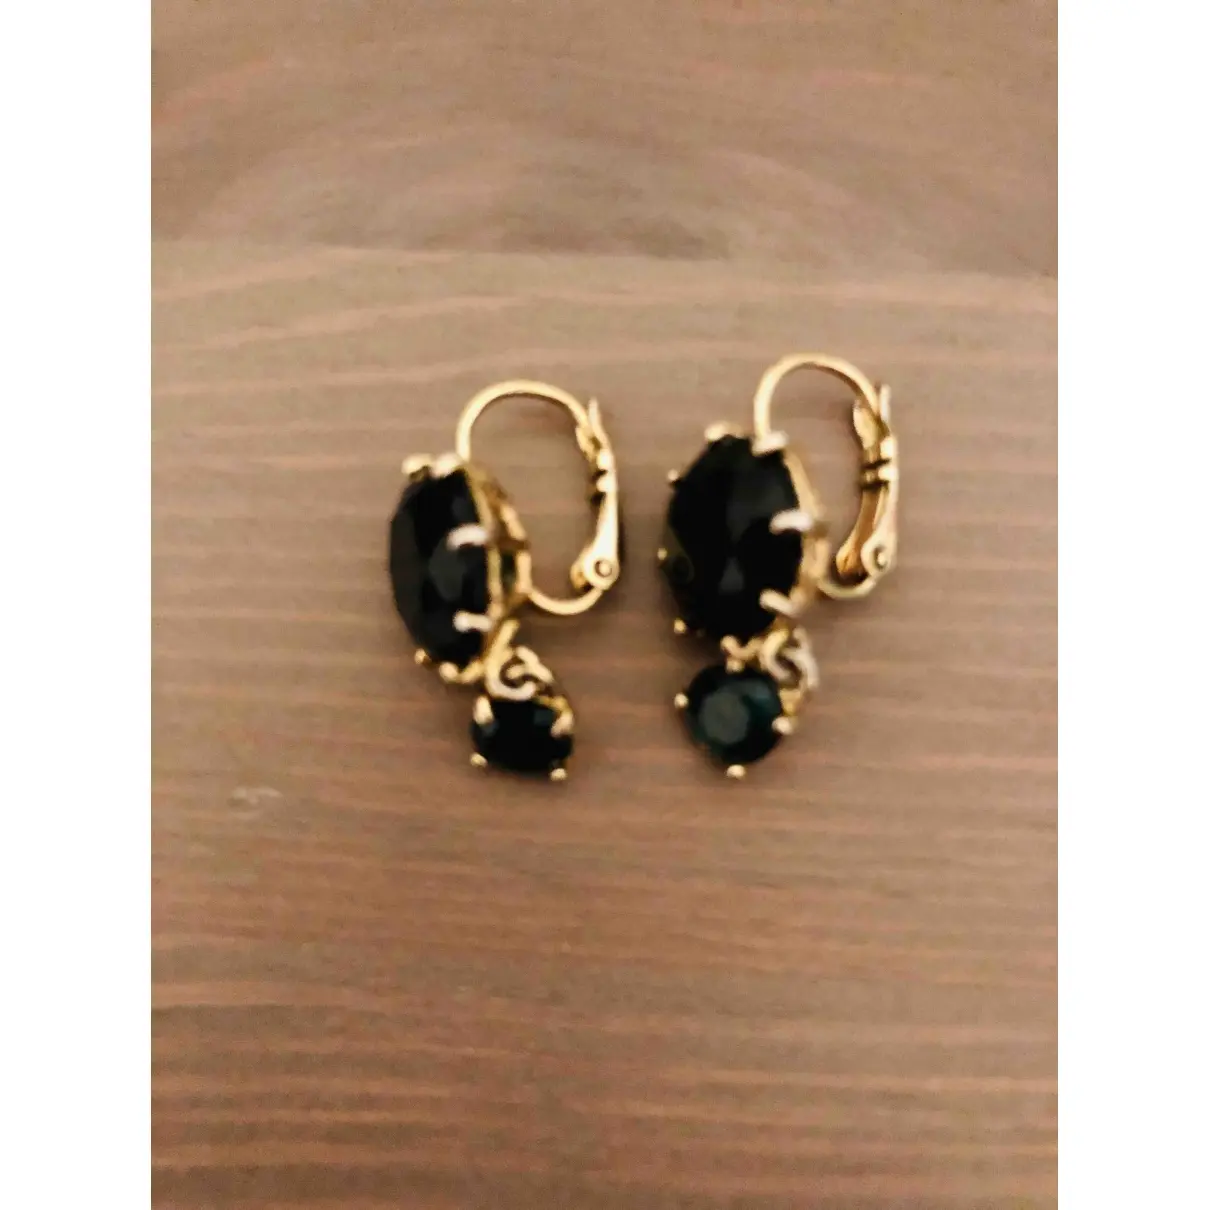 Buy Les Néréides Crystal earrings online